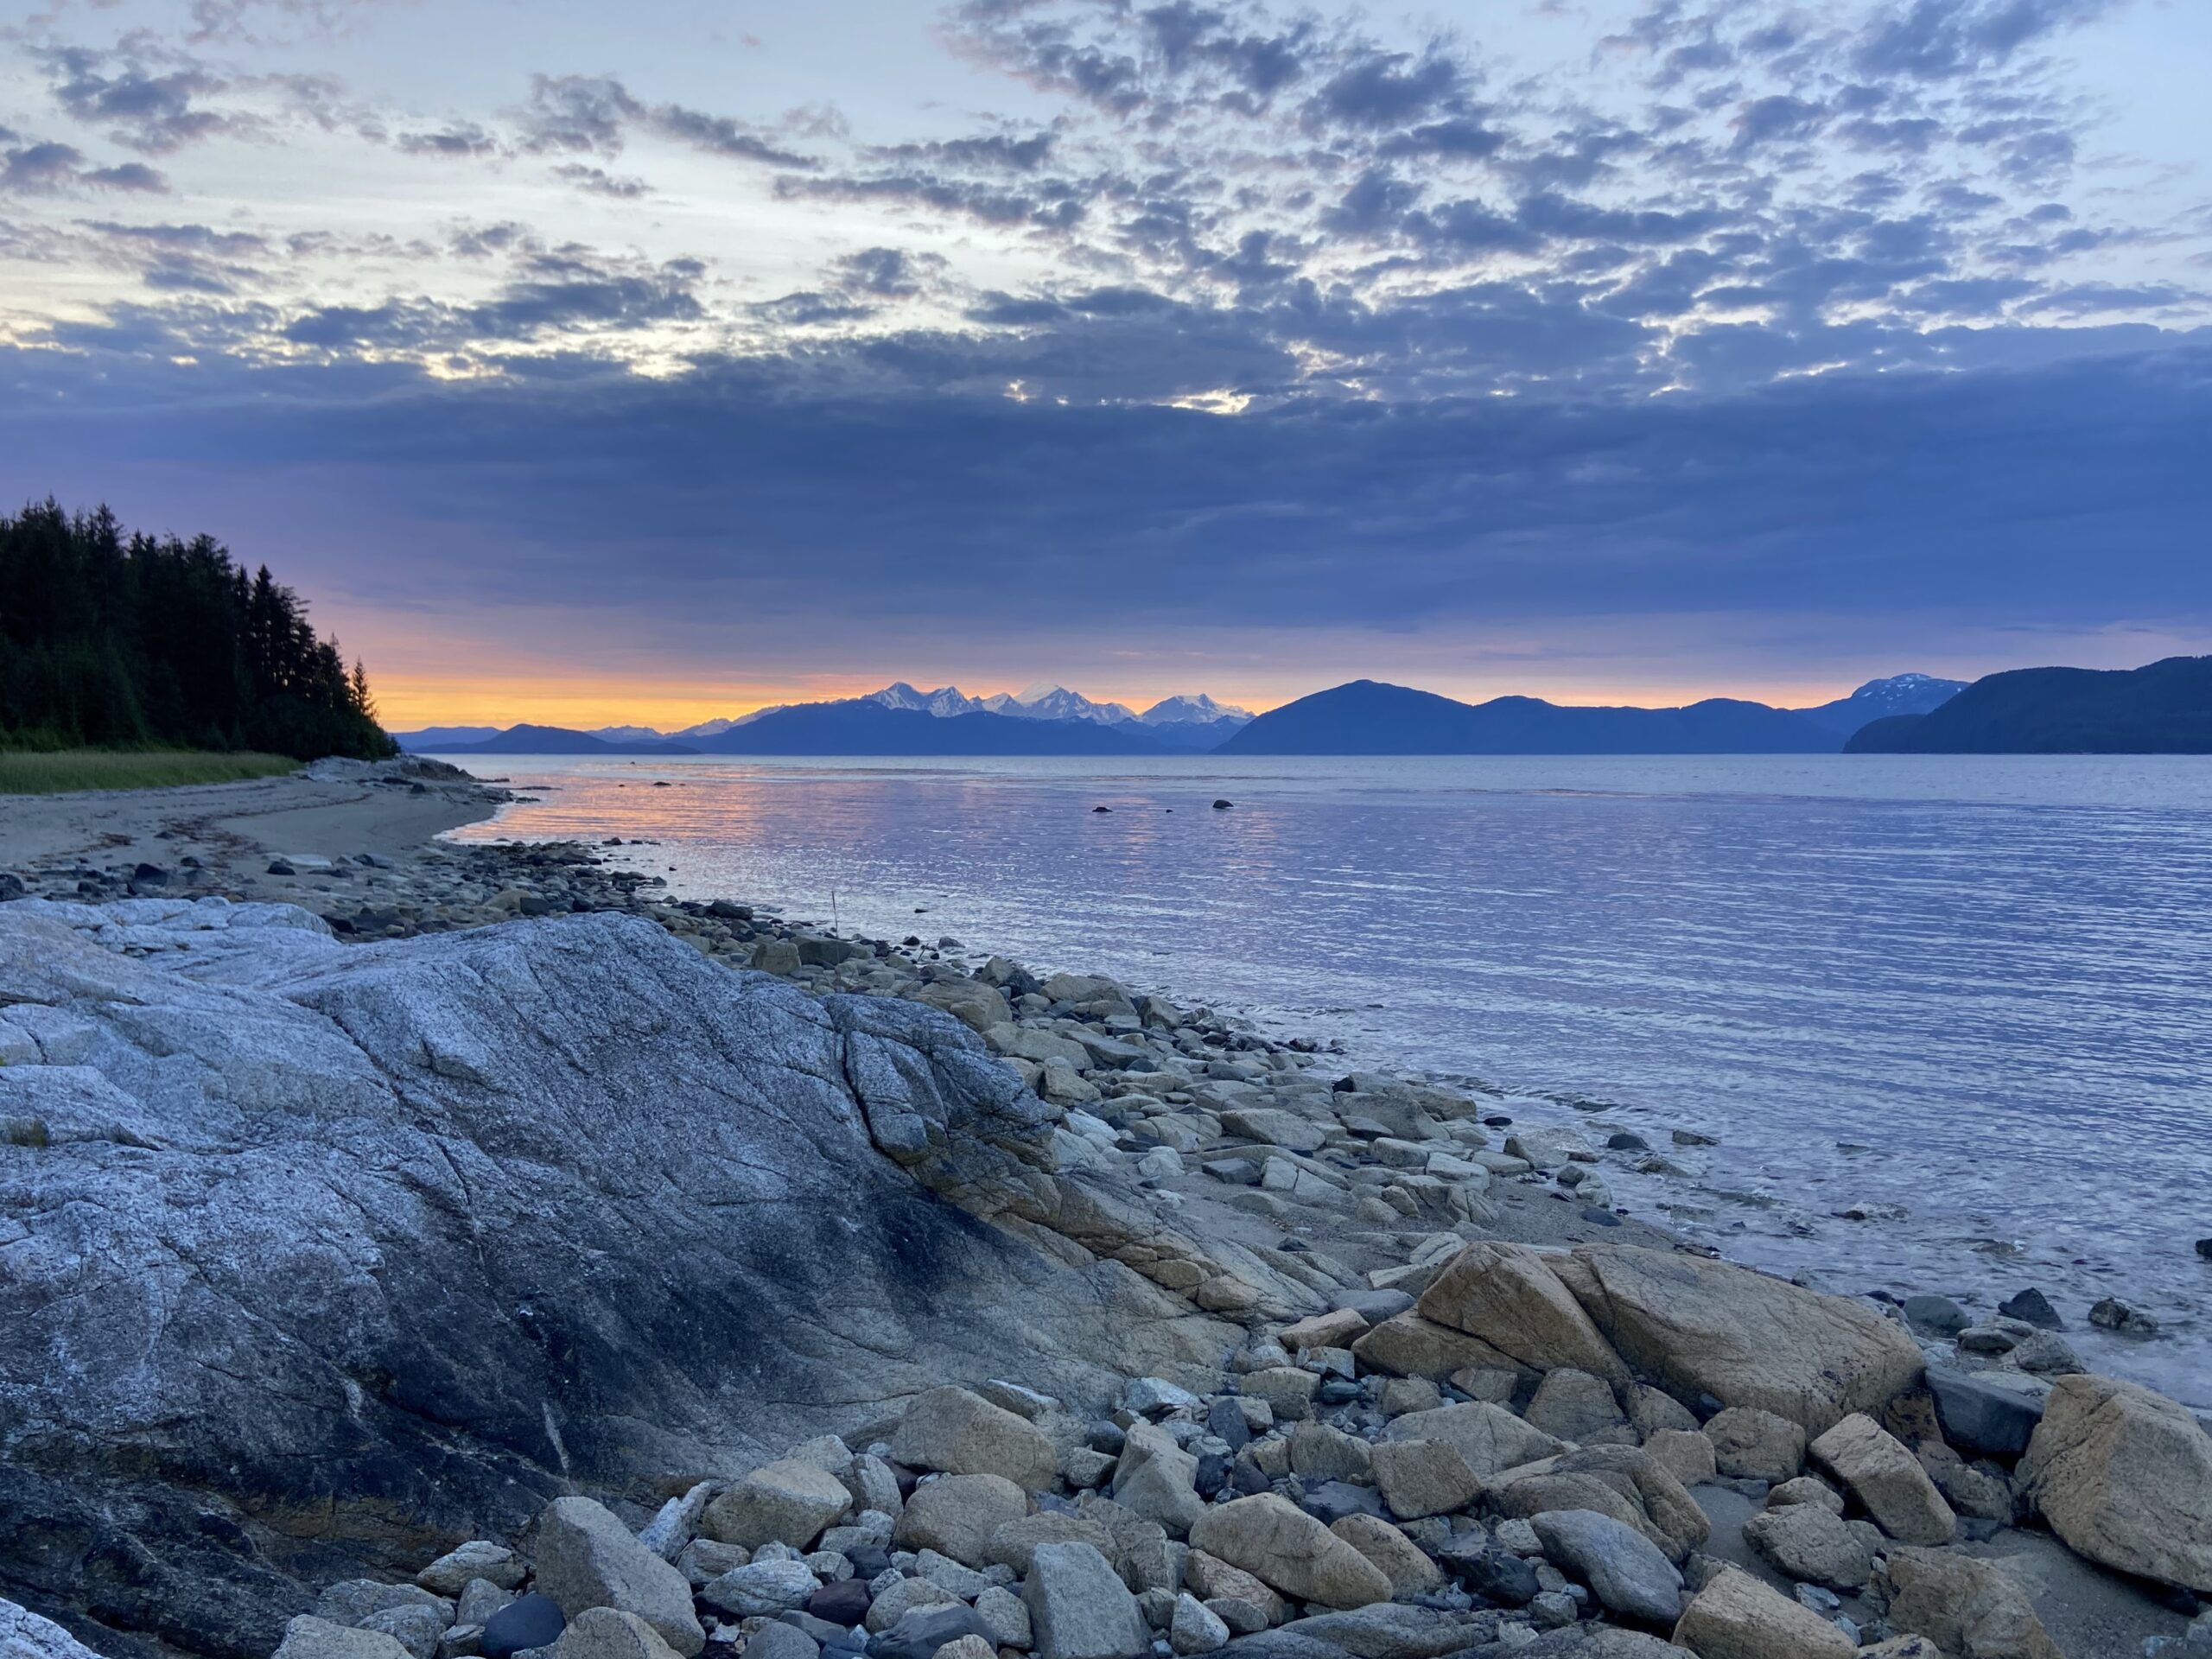 Colorful sunset over the shoreline of Alaska.